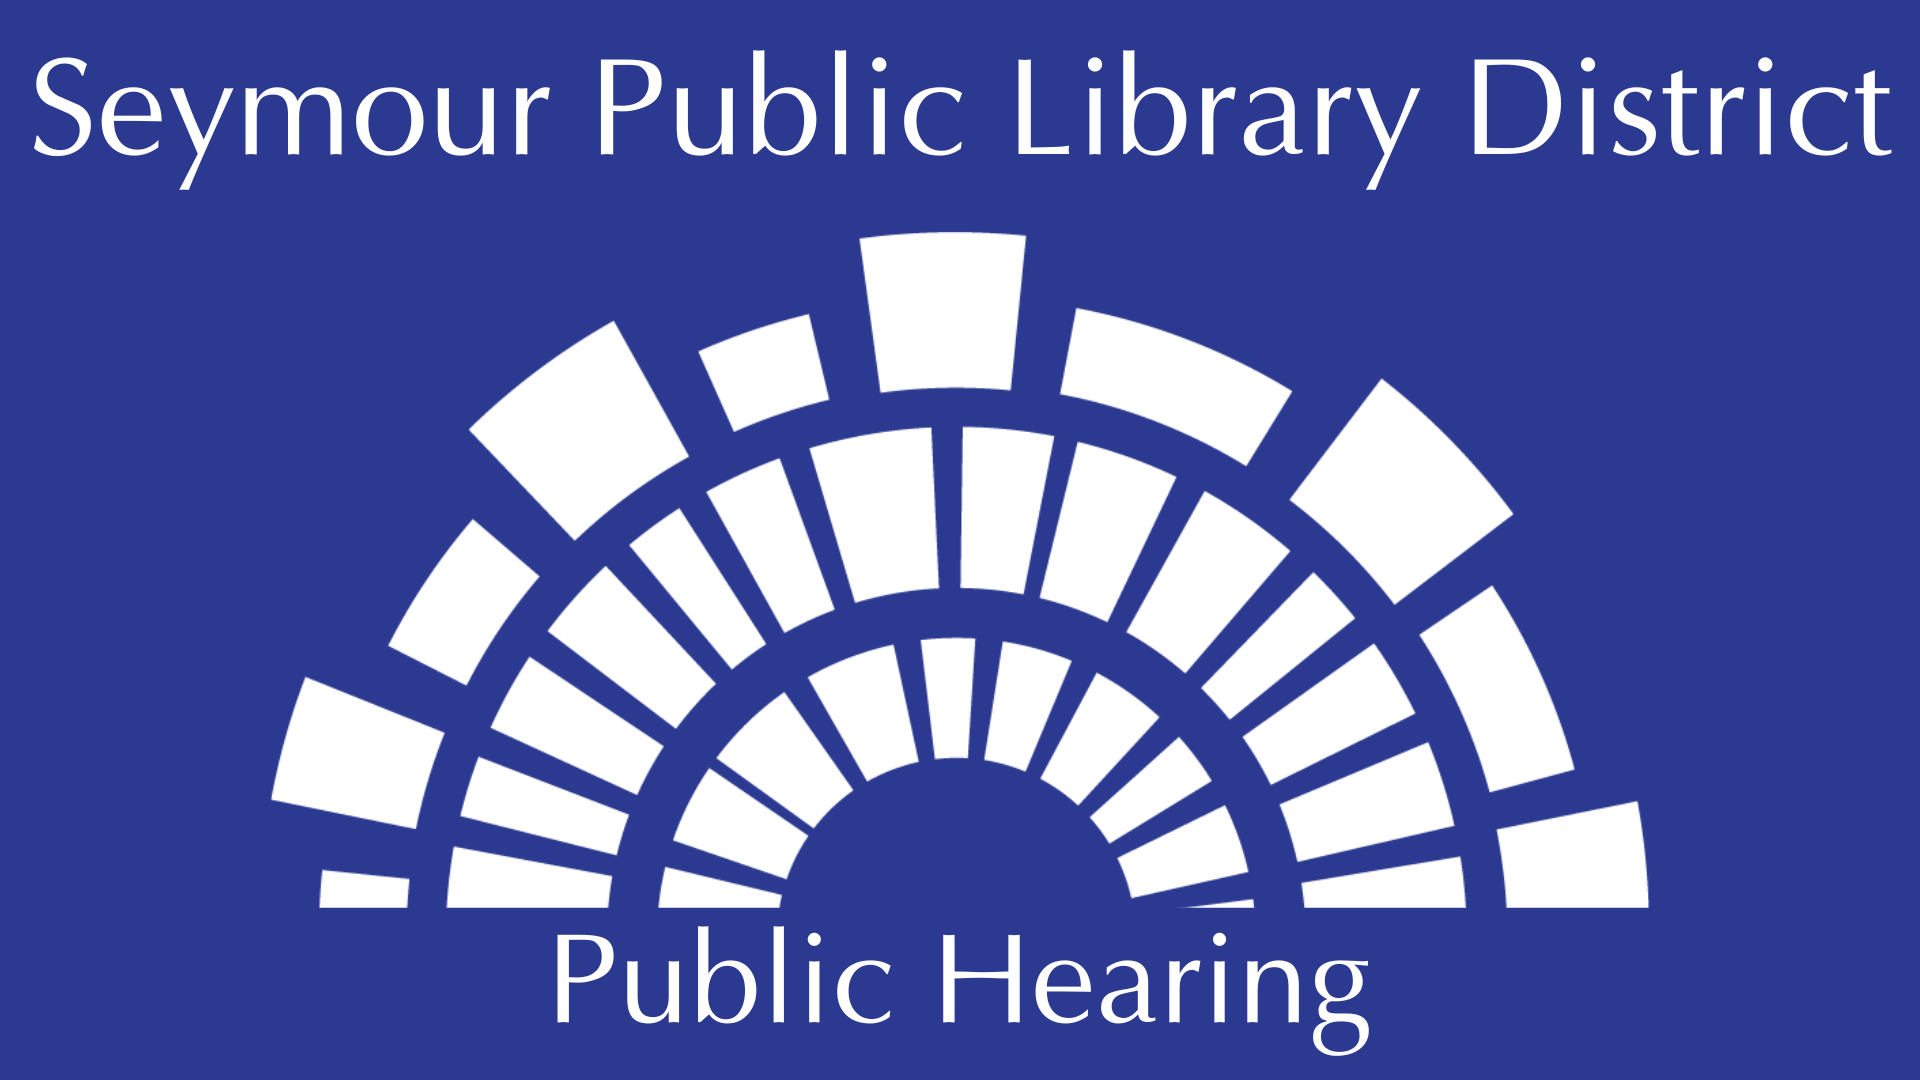 Seymour Public Library District Public Hearing